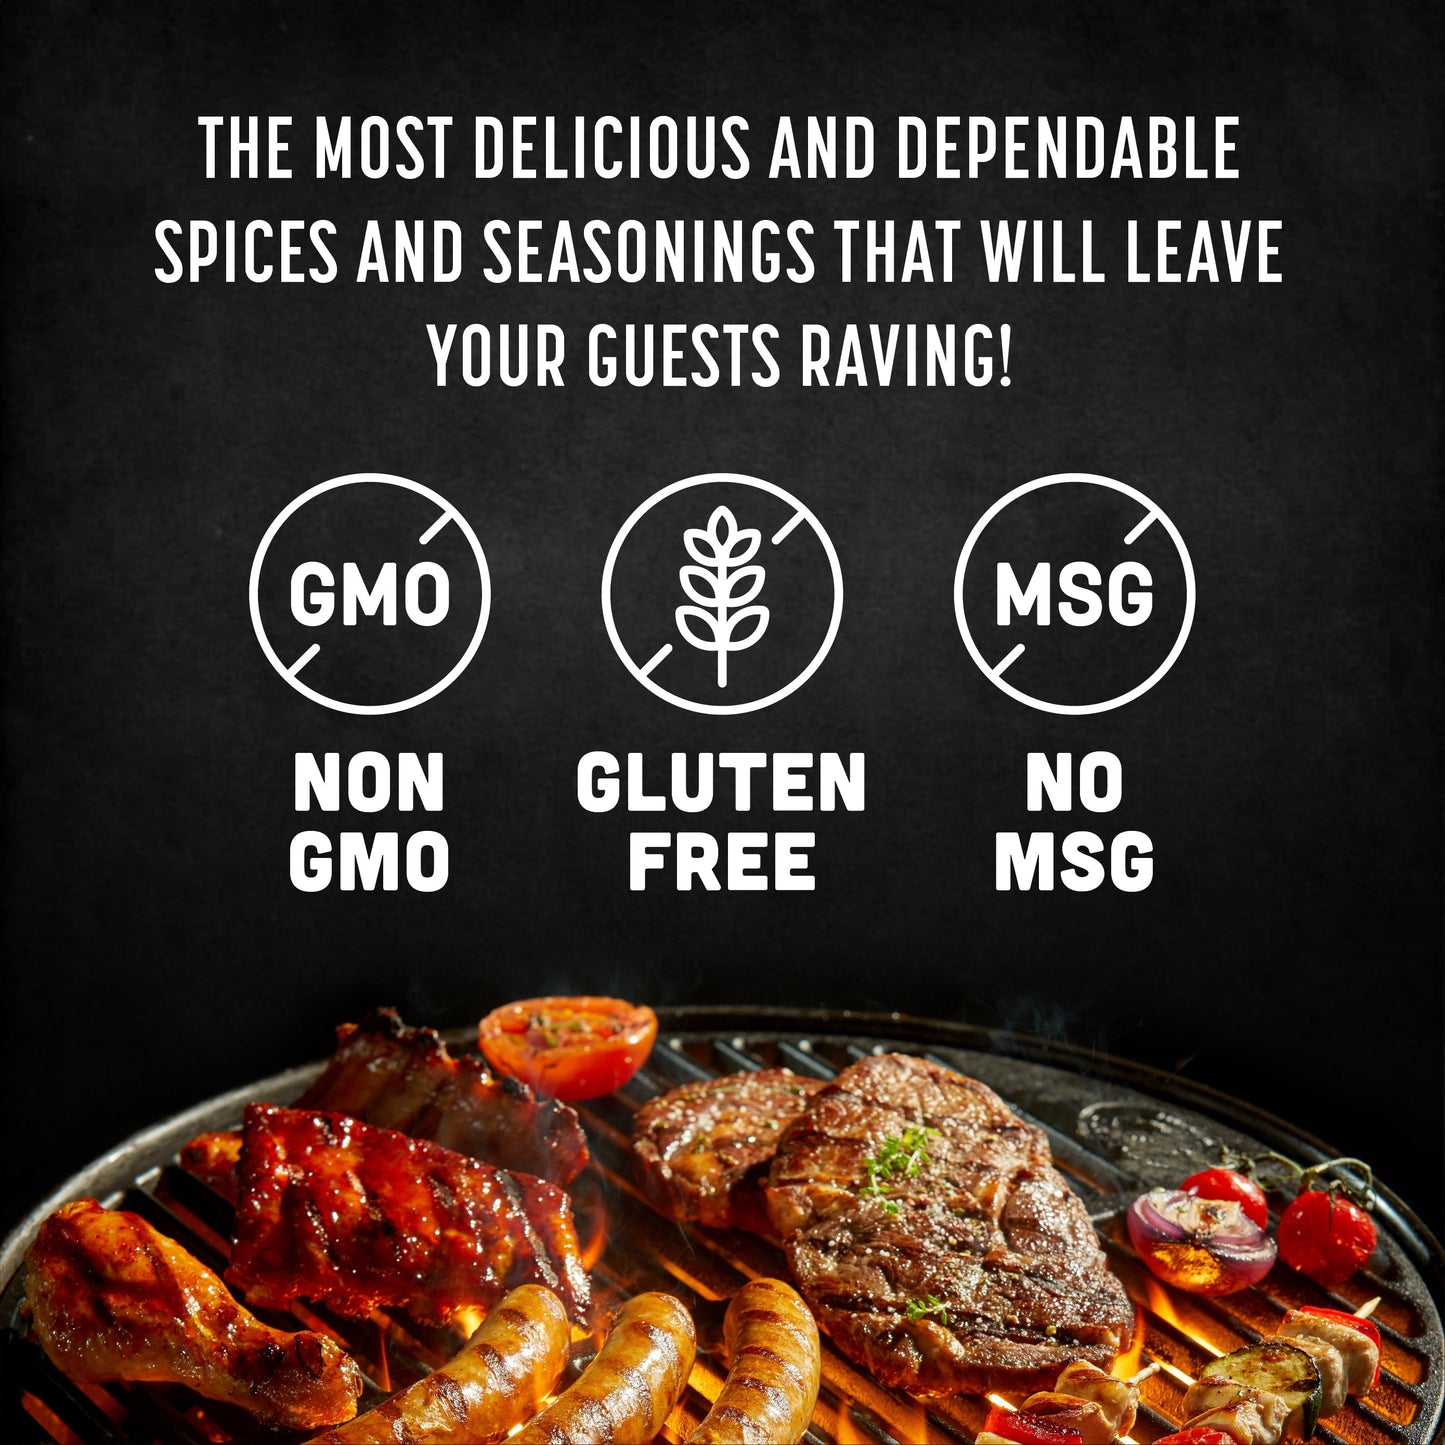 Emblems emphasizing non GMO, gluten free, no MSG.